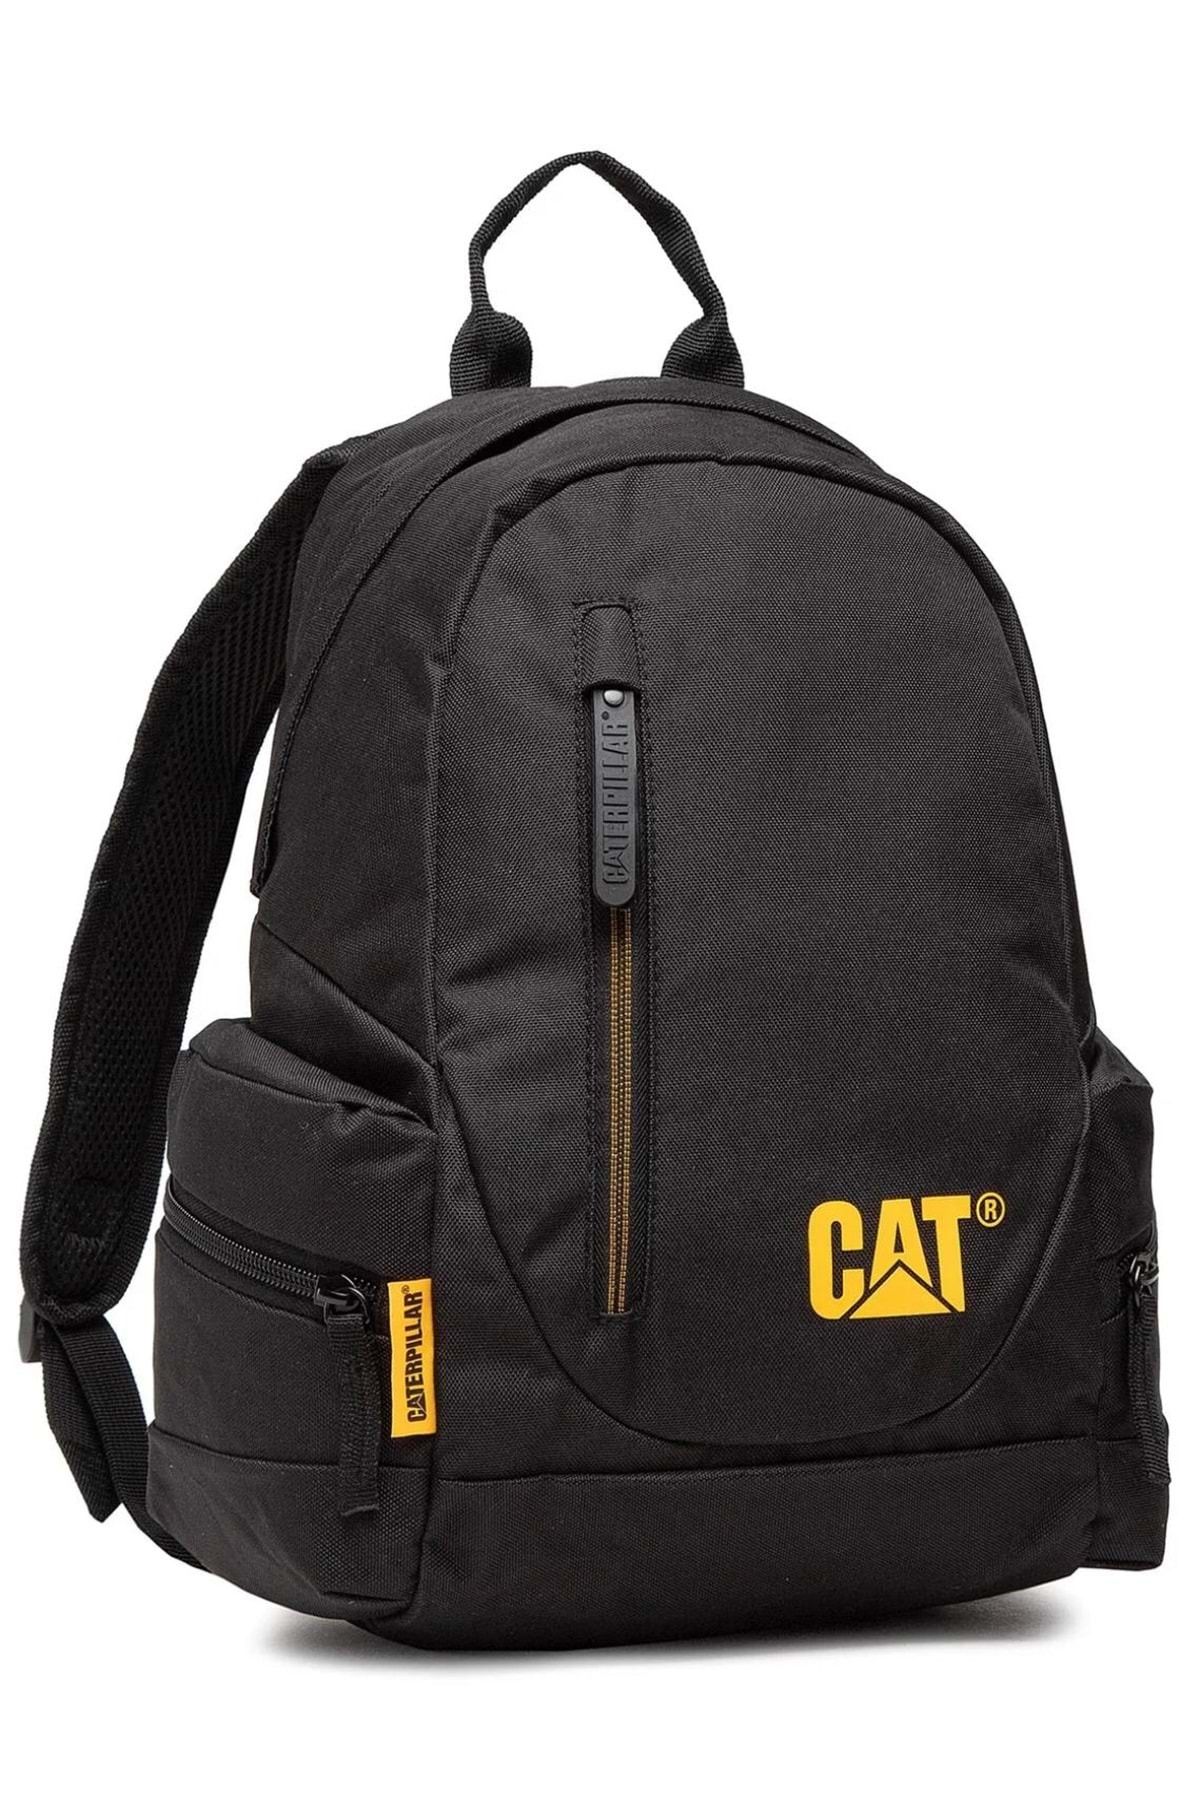 Cat Erpillar Backpack 83541- 700 G / 20 L Unisex Sırt Çantası Siyah